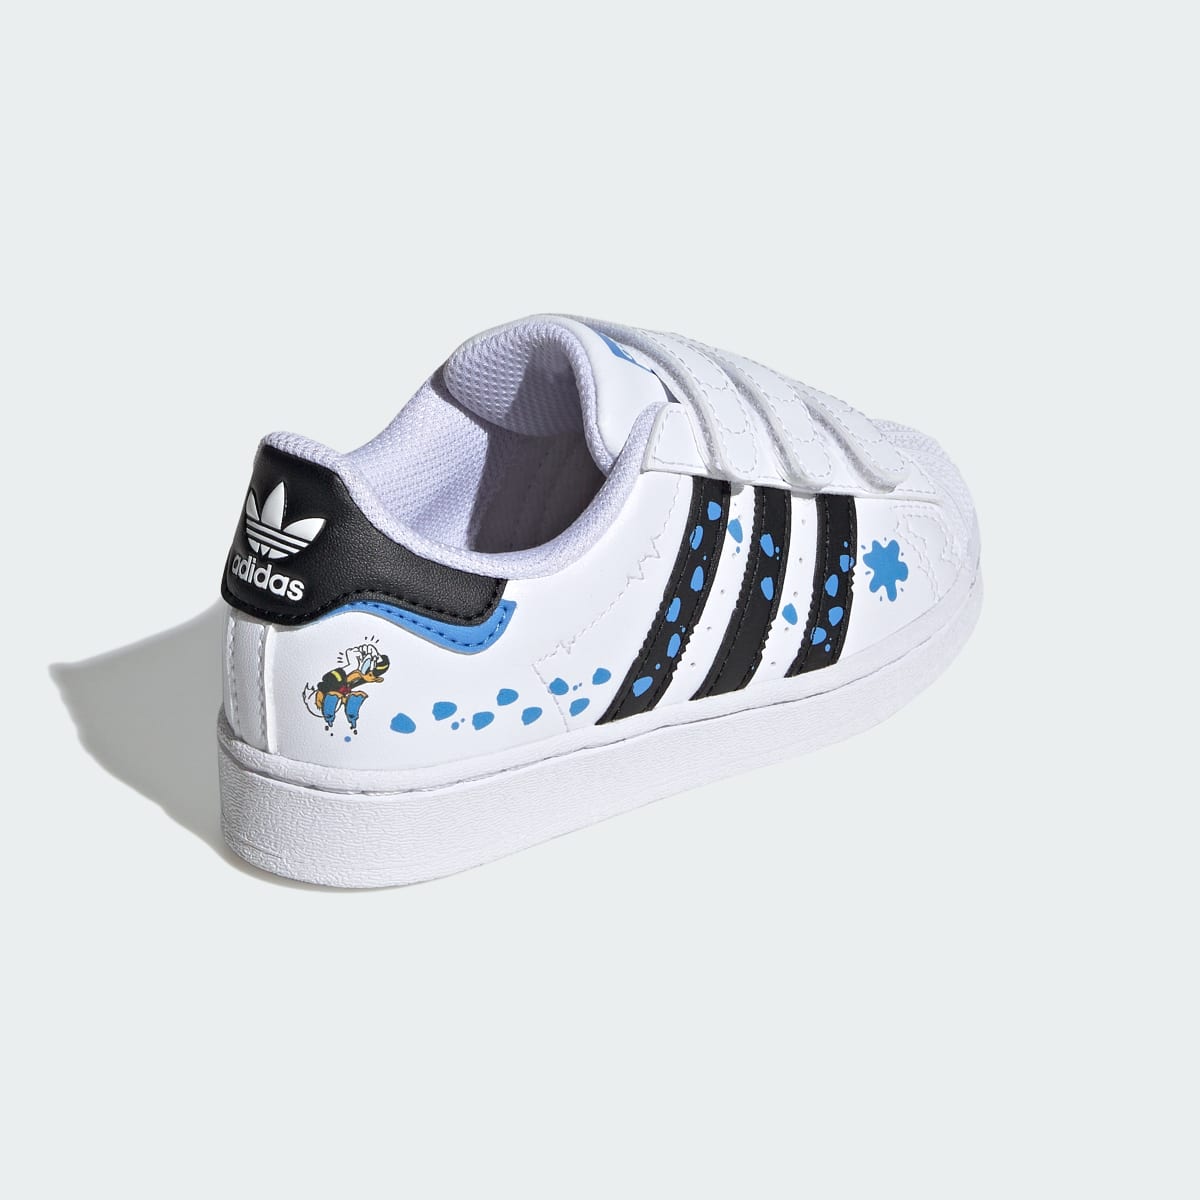 Adidas Originals x Disney Superstar Kids Schuh. 8